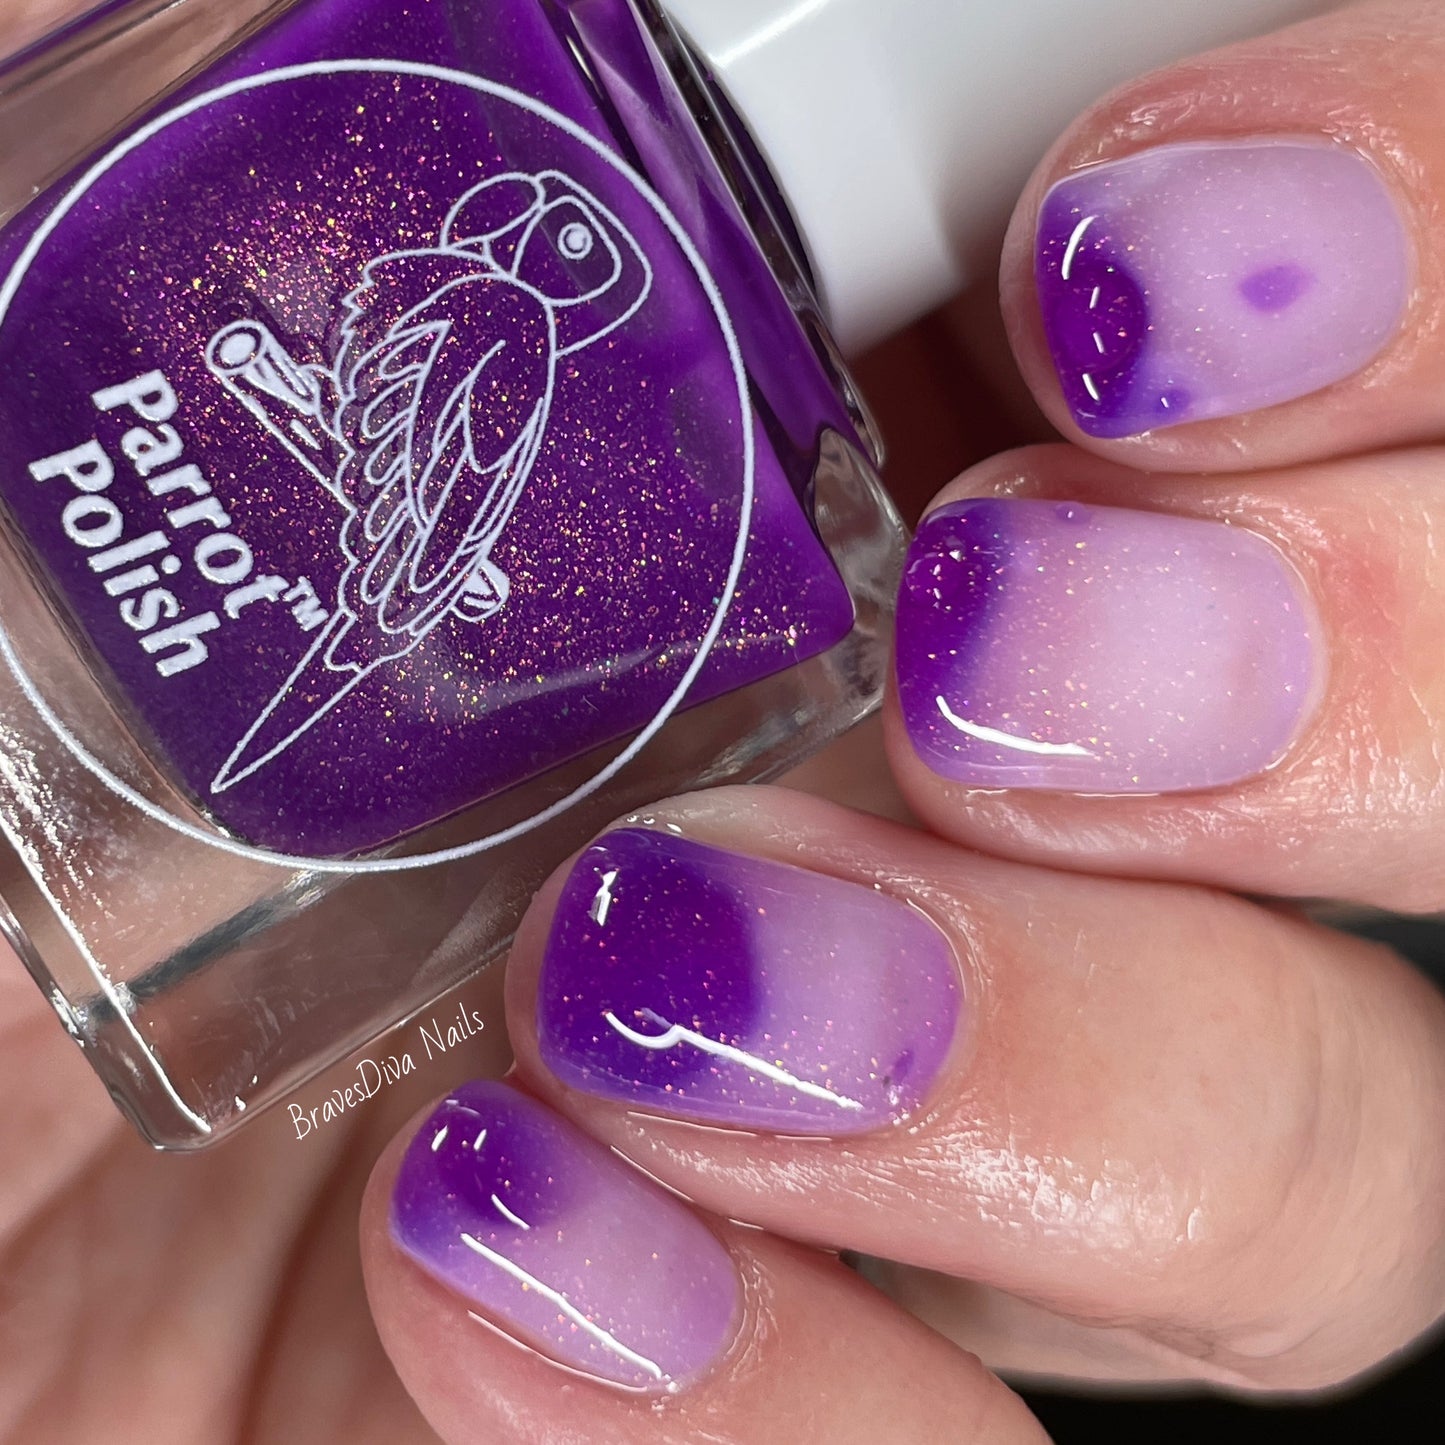 Parrot Polish Fairy Thermal Nail Polish V2 - Purple/Pink